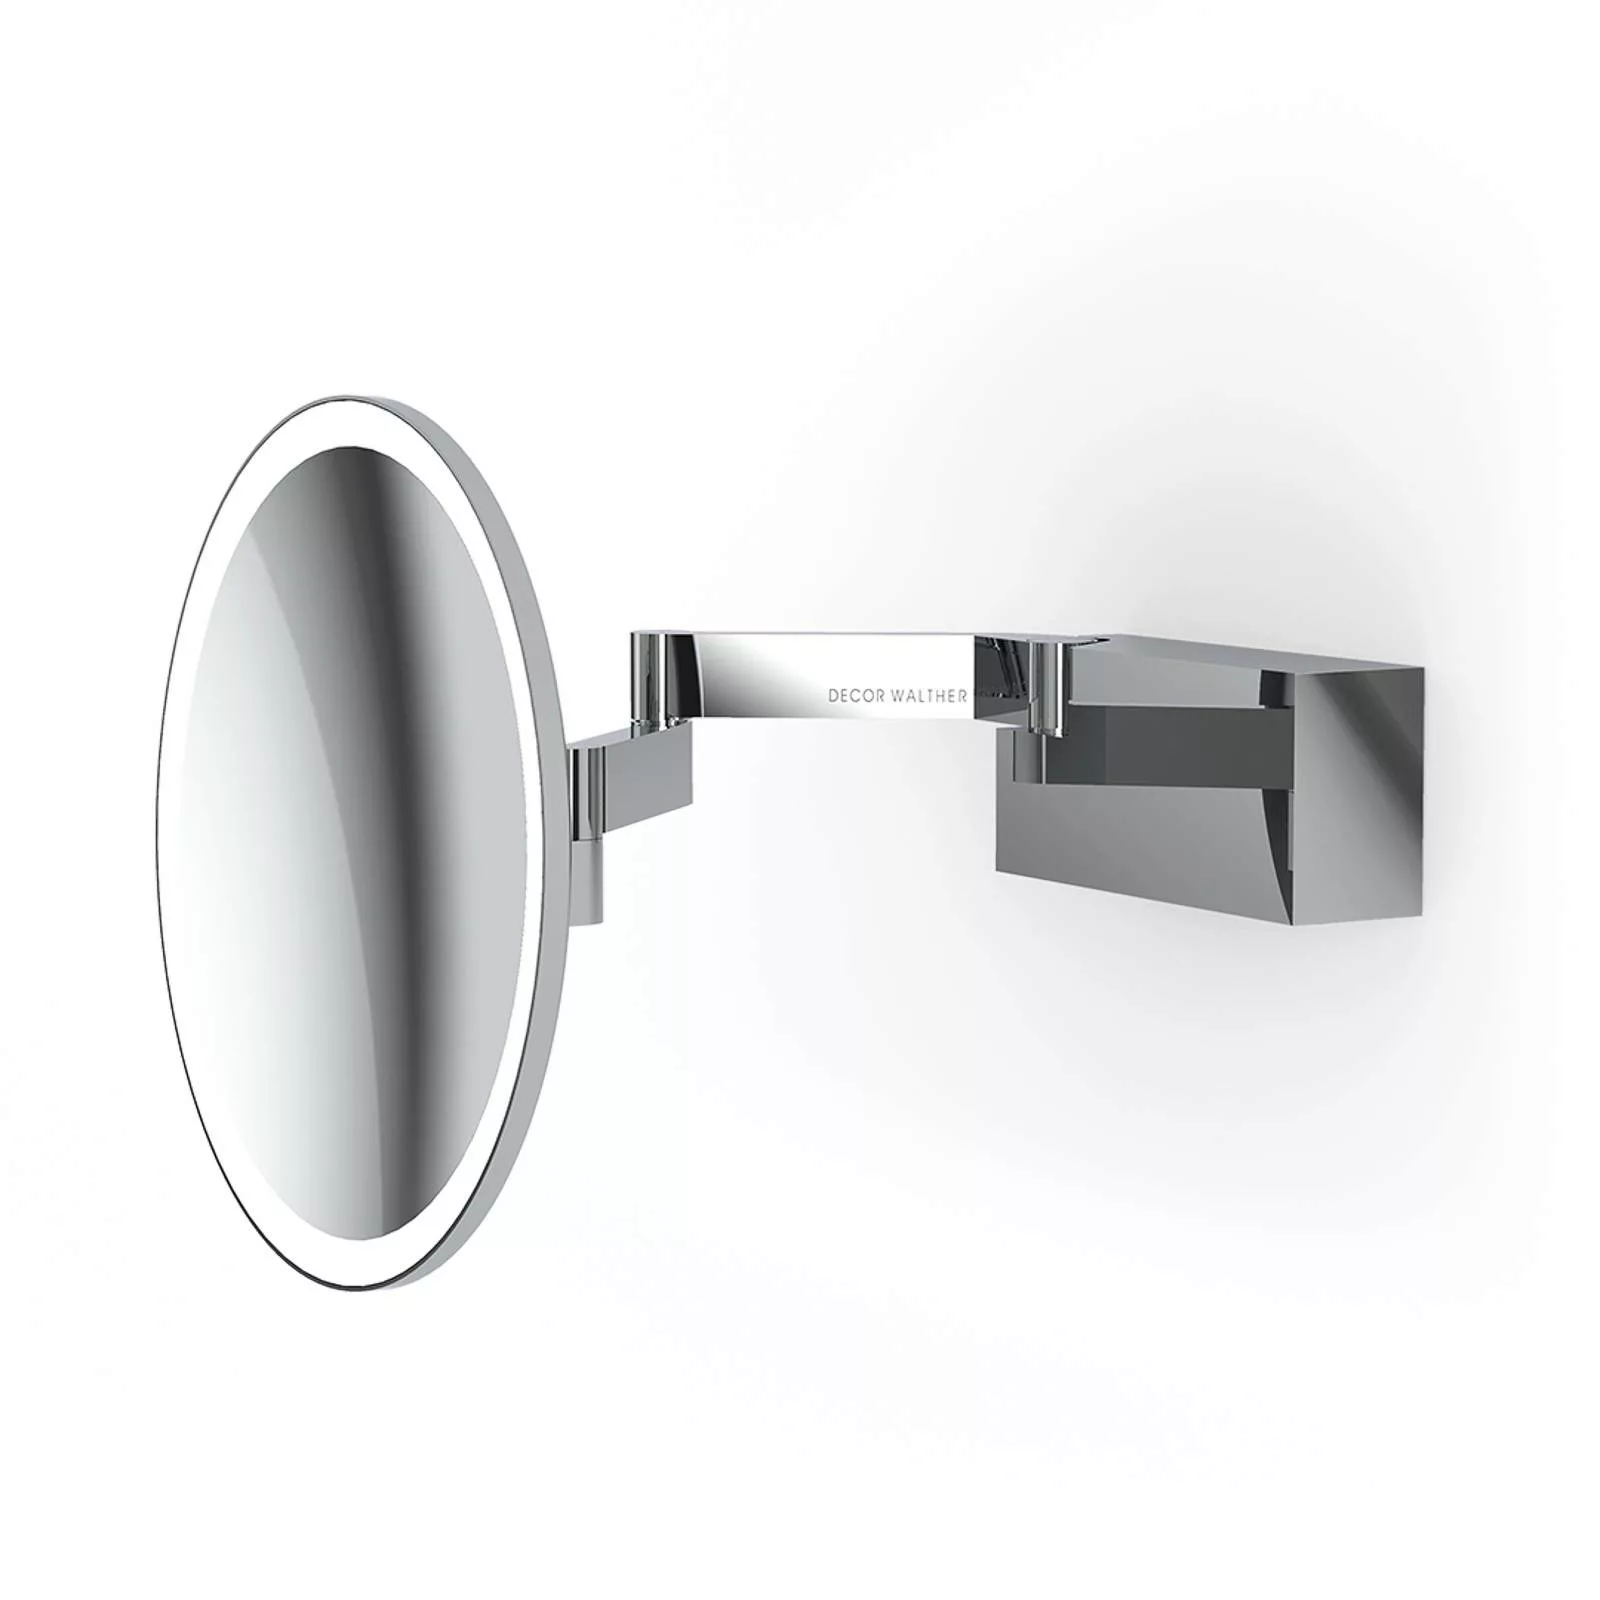 Decor Walther Vision R LED-Kosmetikspiegel chrom günstig online kaufen